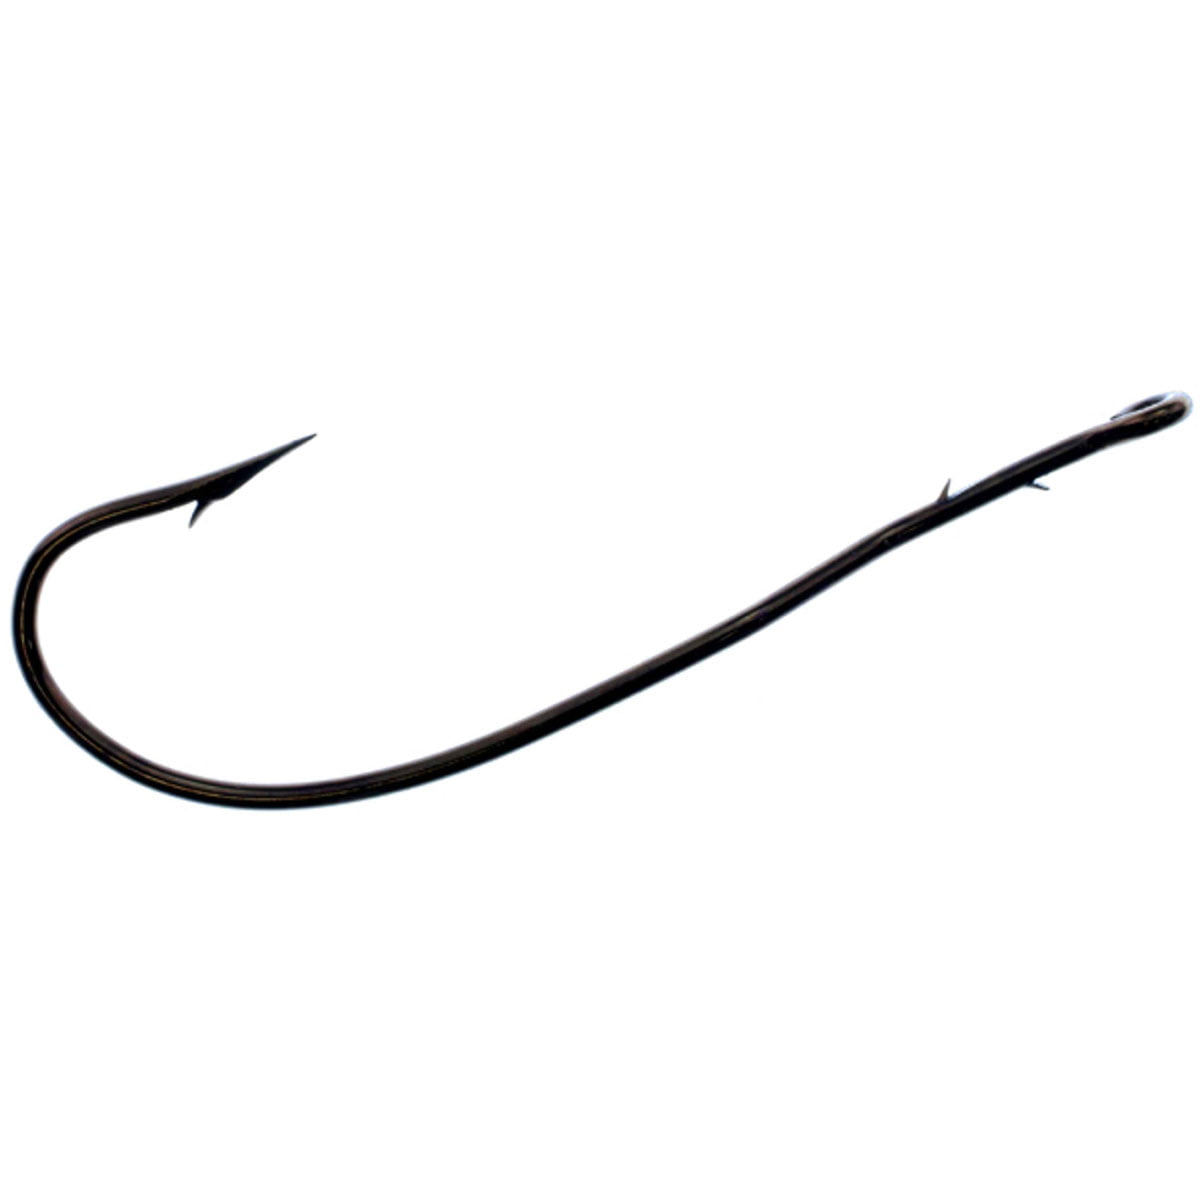 Tru-Turn 047zs-1 Medium Wire Bass Worm Hook Size 1 Spear Point for sale online 